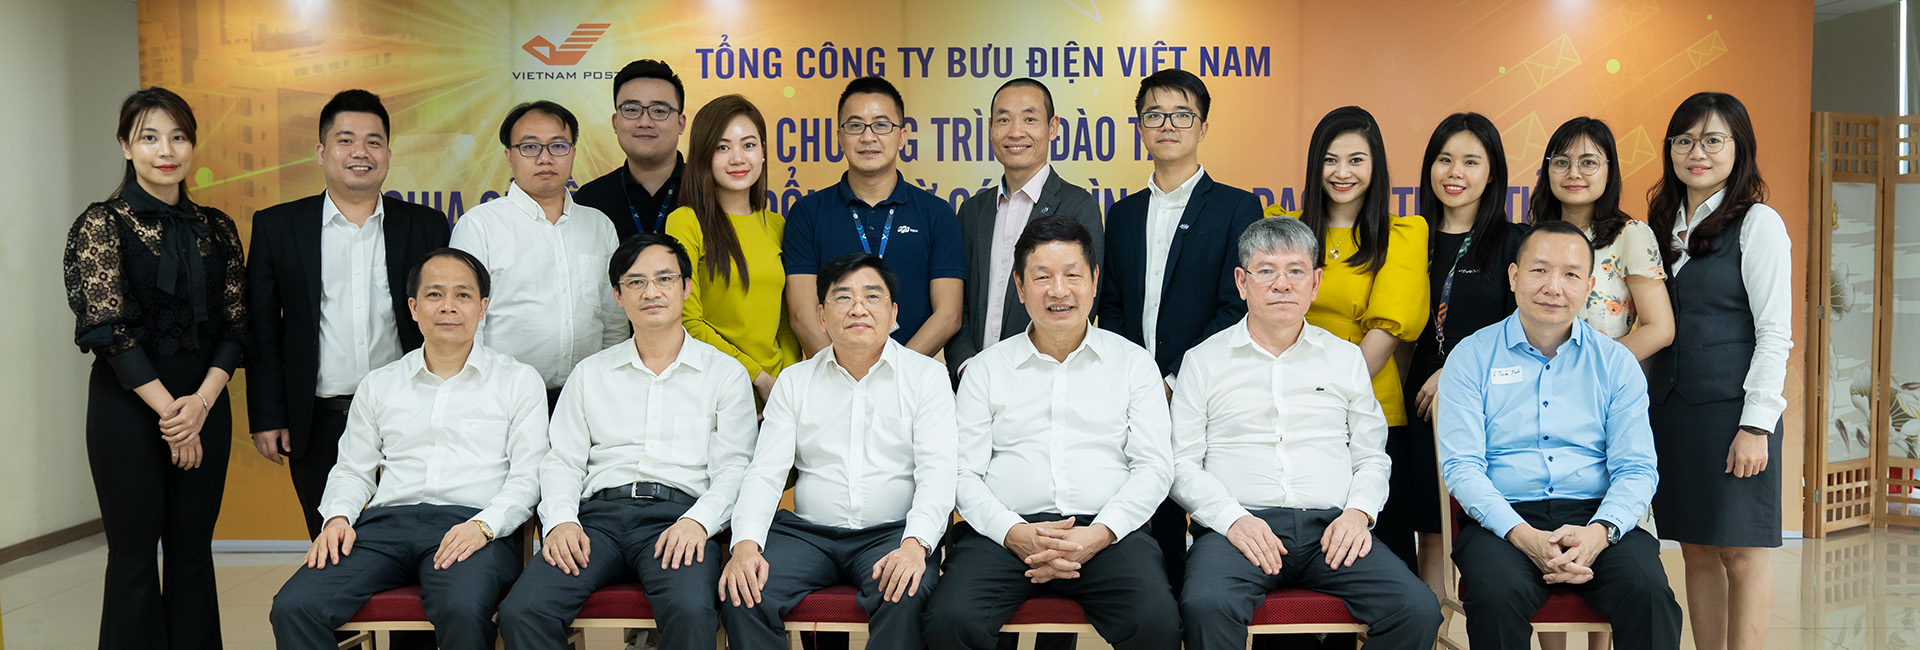 Workshop on digital transformation at Corporation of Vietnam Post Office – Vietnam Post